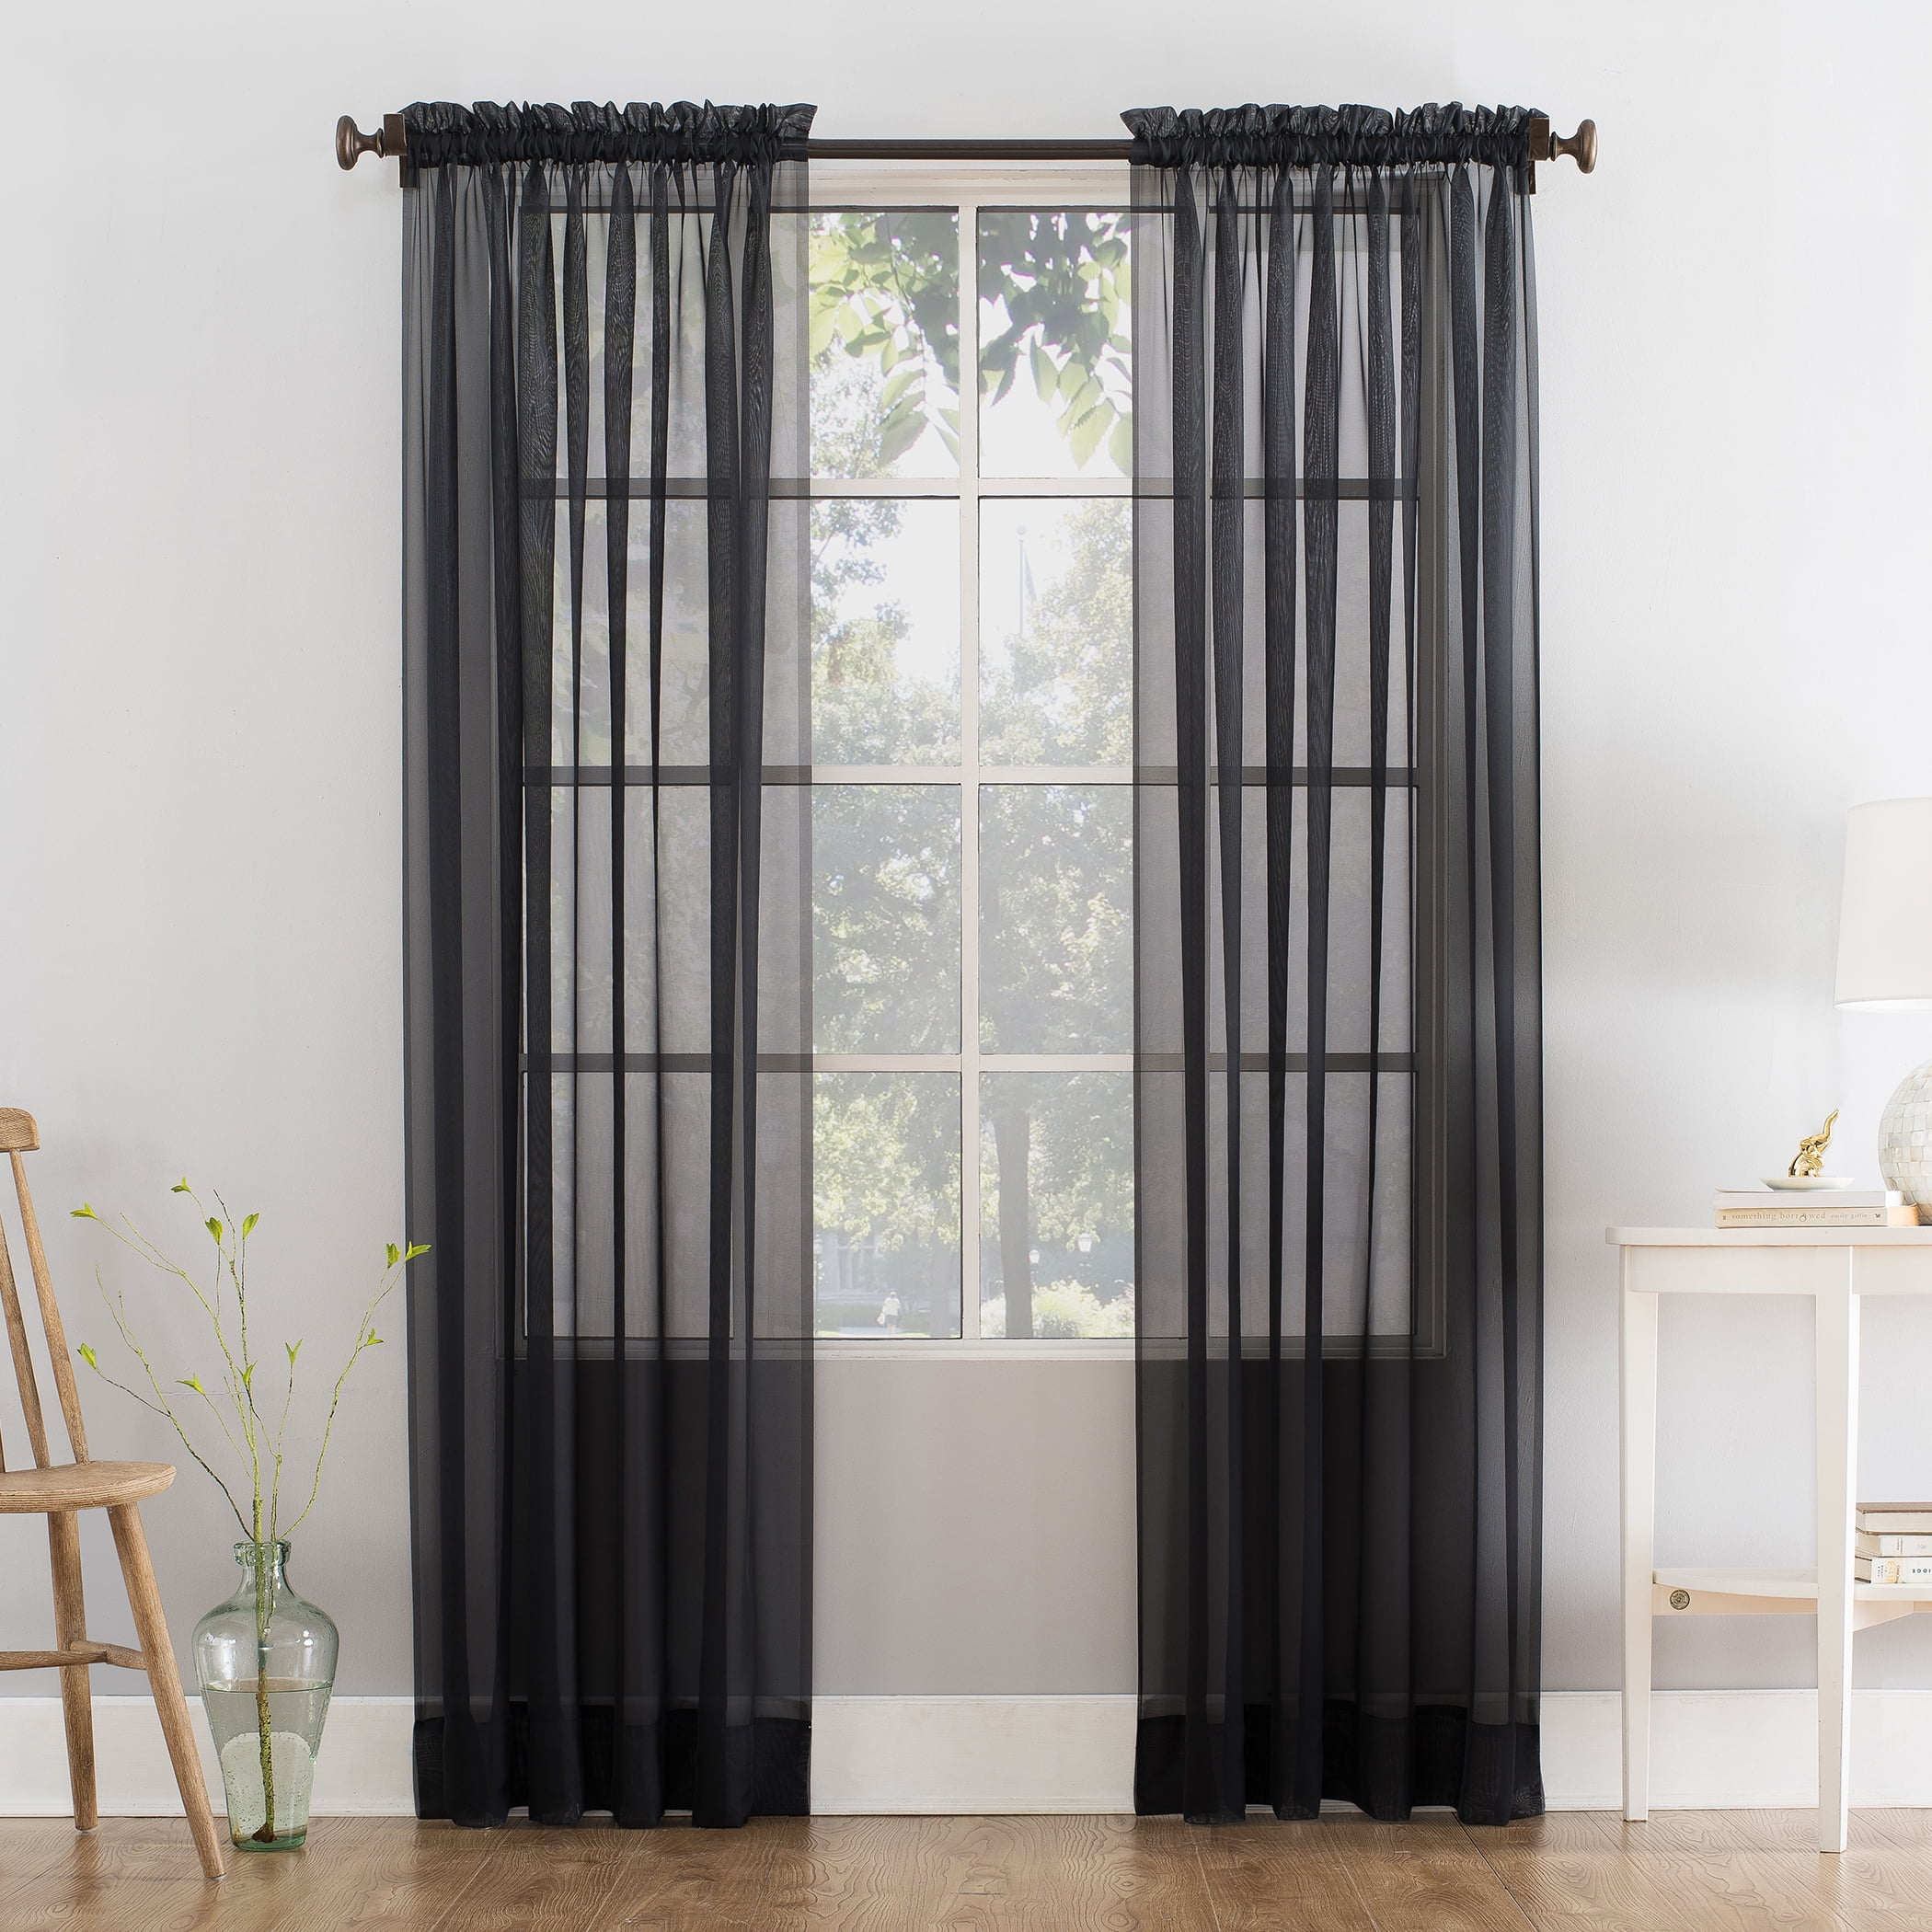 Mainstays Marjorie Sheer Voile Curtain, Single Panel, 59"w x 63"l, Black